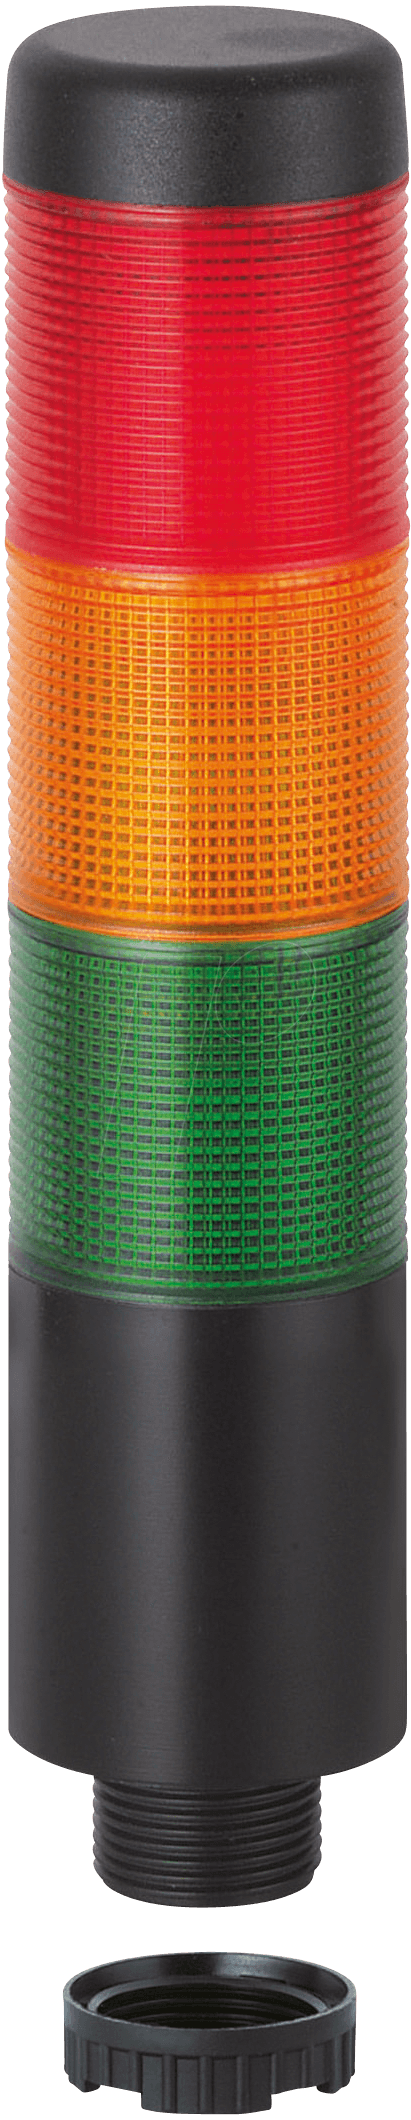 WERMA 698 110 75 - LED-Säule, gn/ge/rt, Kab, 24 V AC/DC von WERMA SIGNALTECHNIK